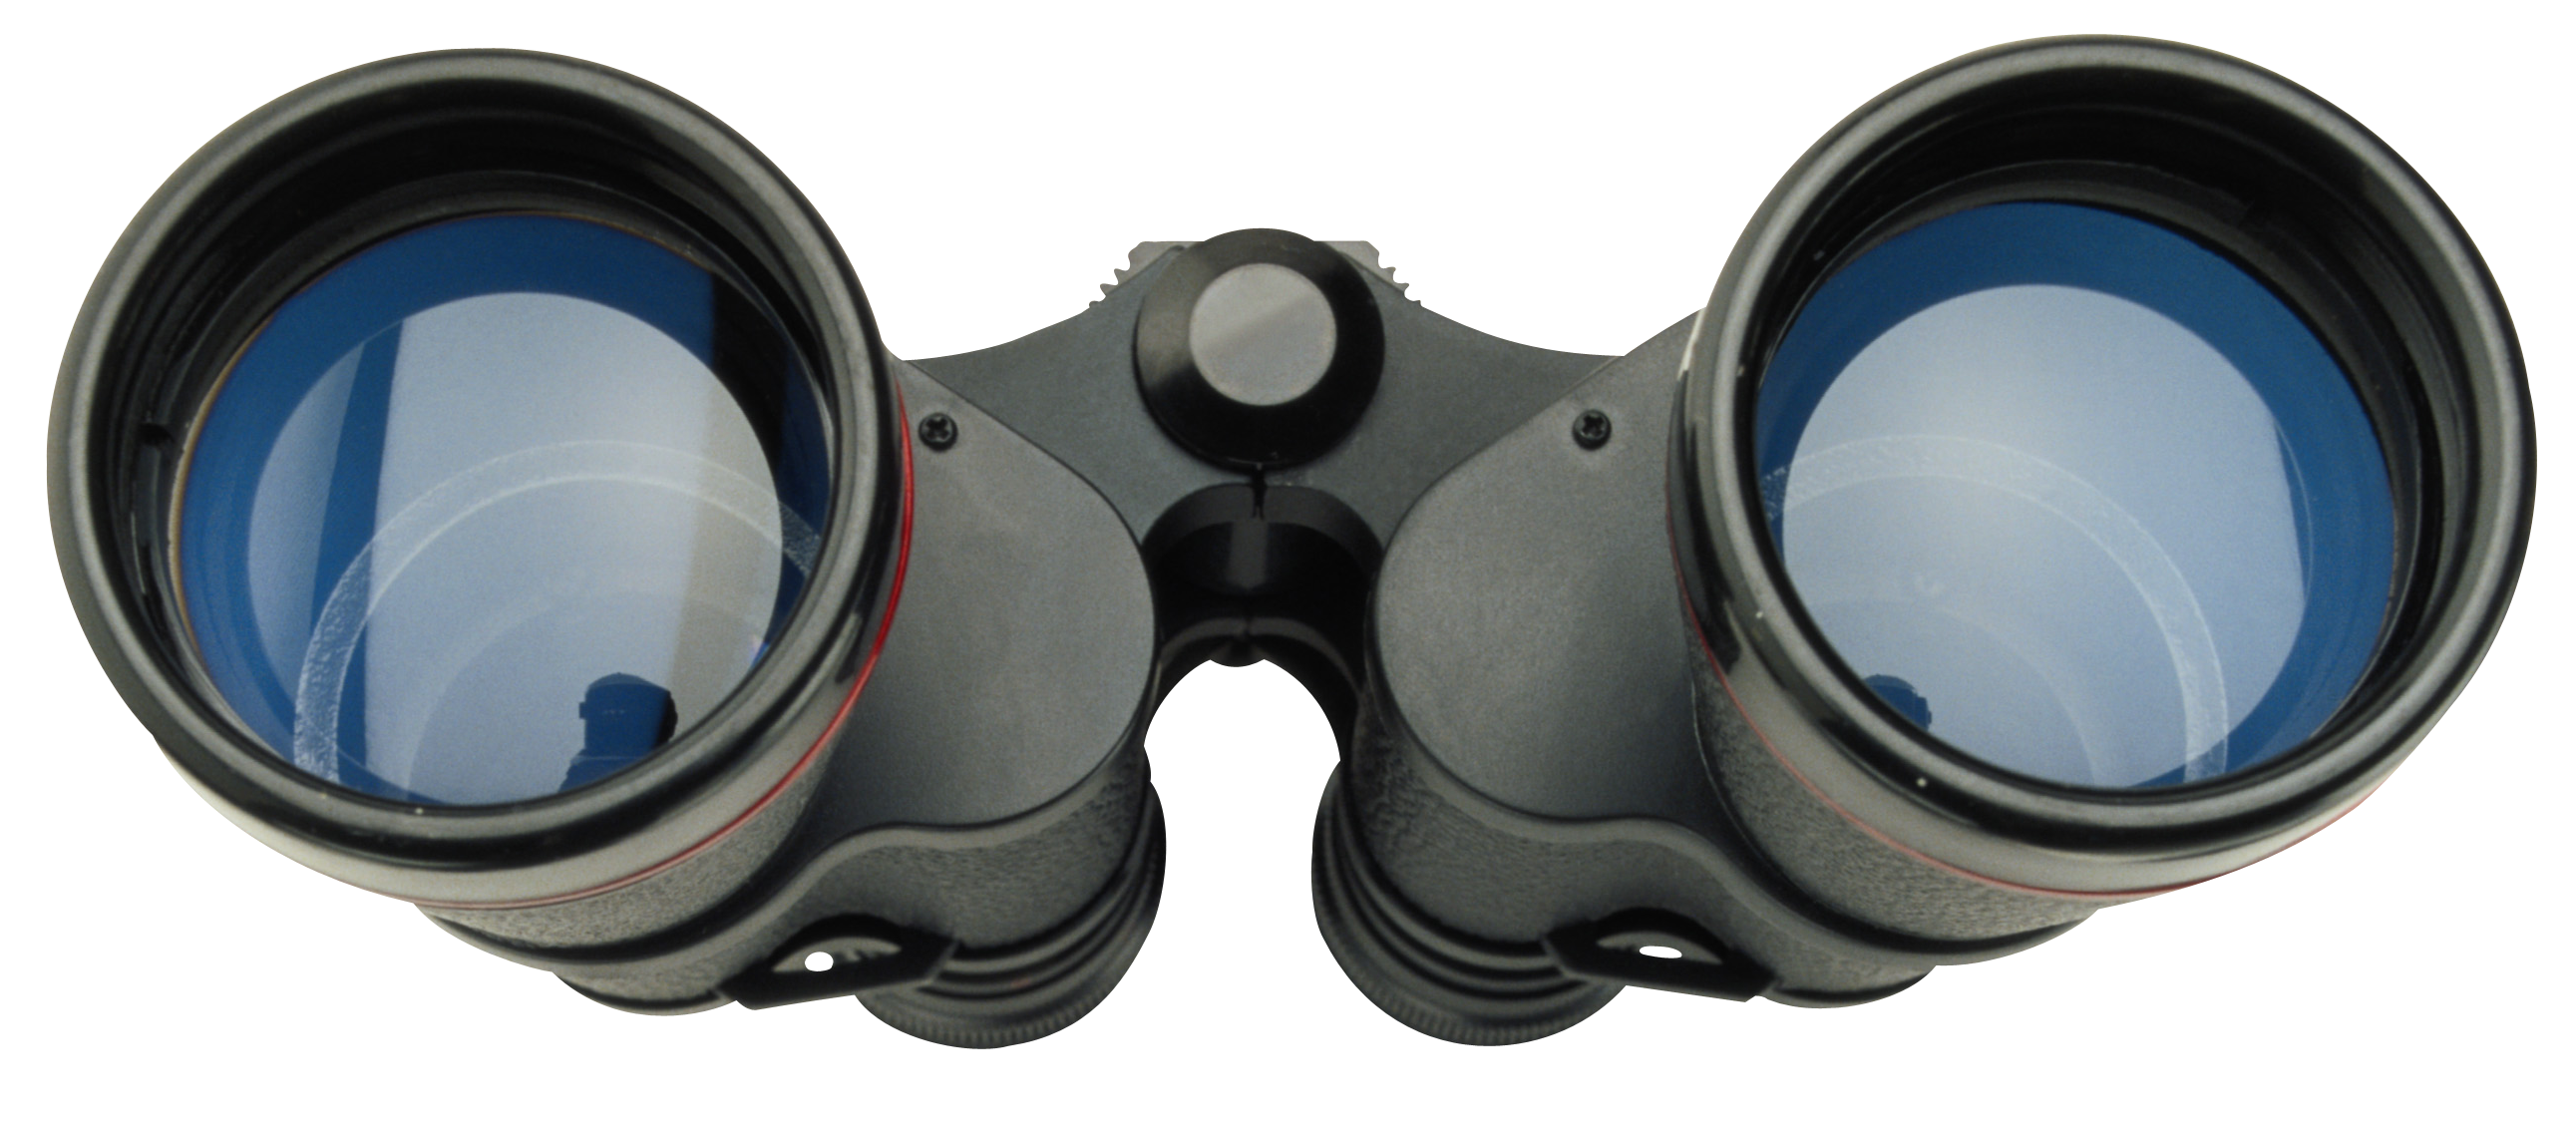 Binocular PNG Transparent Image